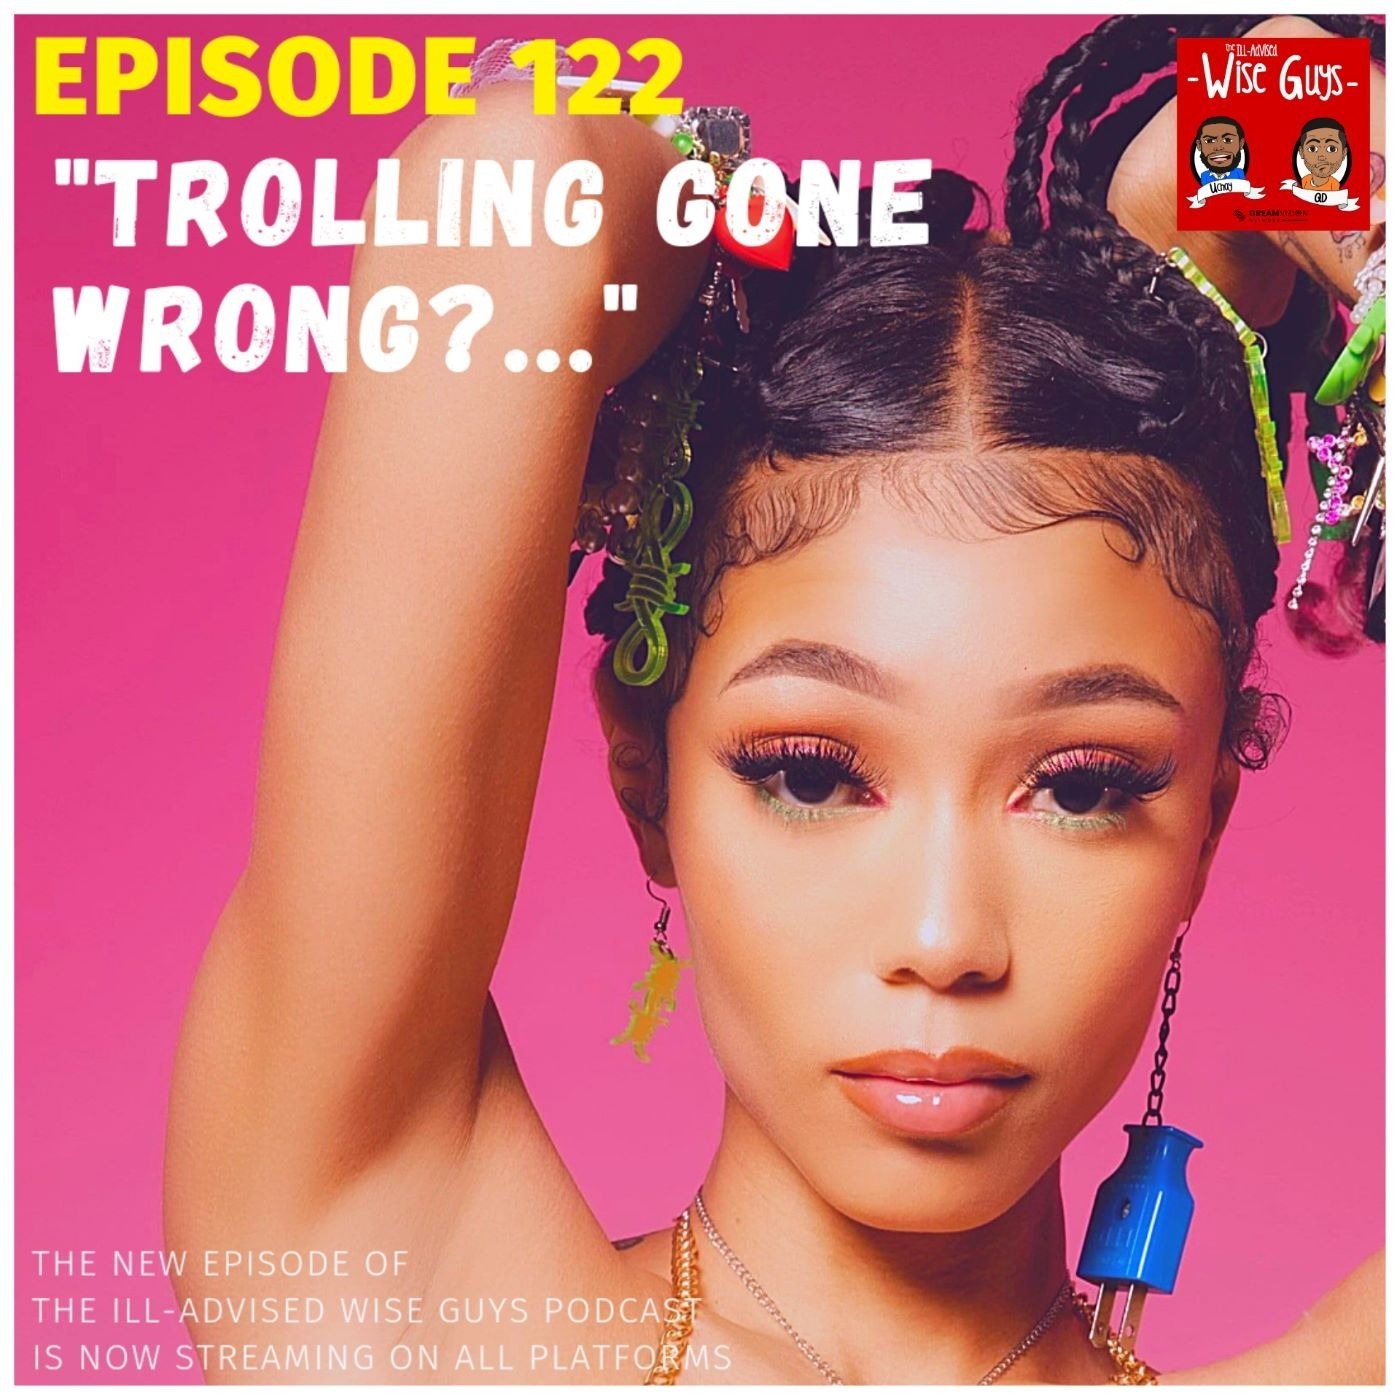 Episode 122 - "Trolling Gone Wrong?..." Image